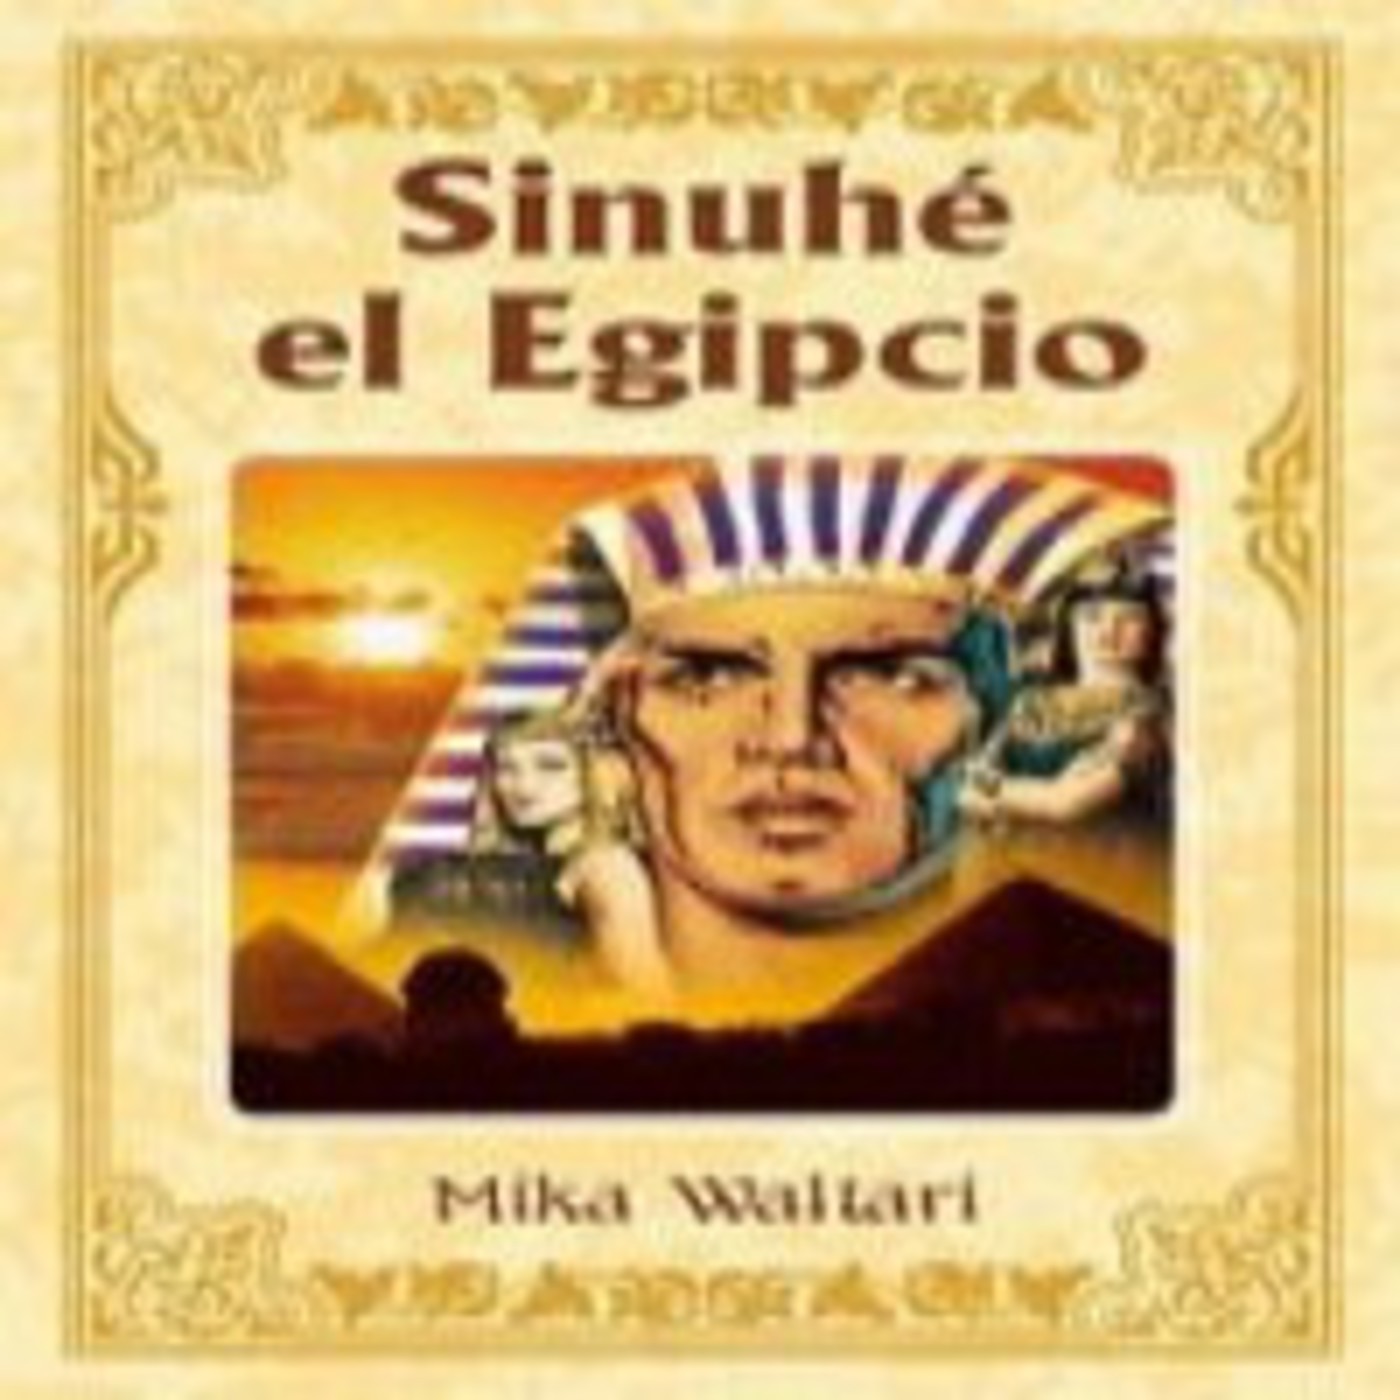 Sinuhé, el egipcio - Mika Waltari